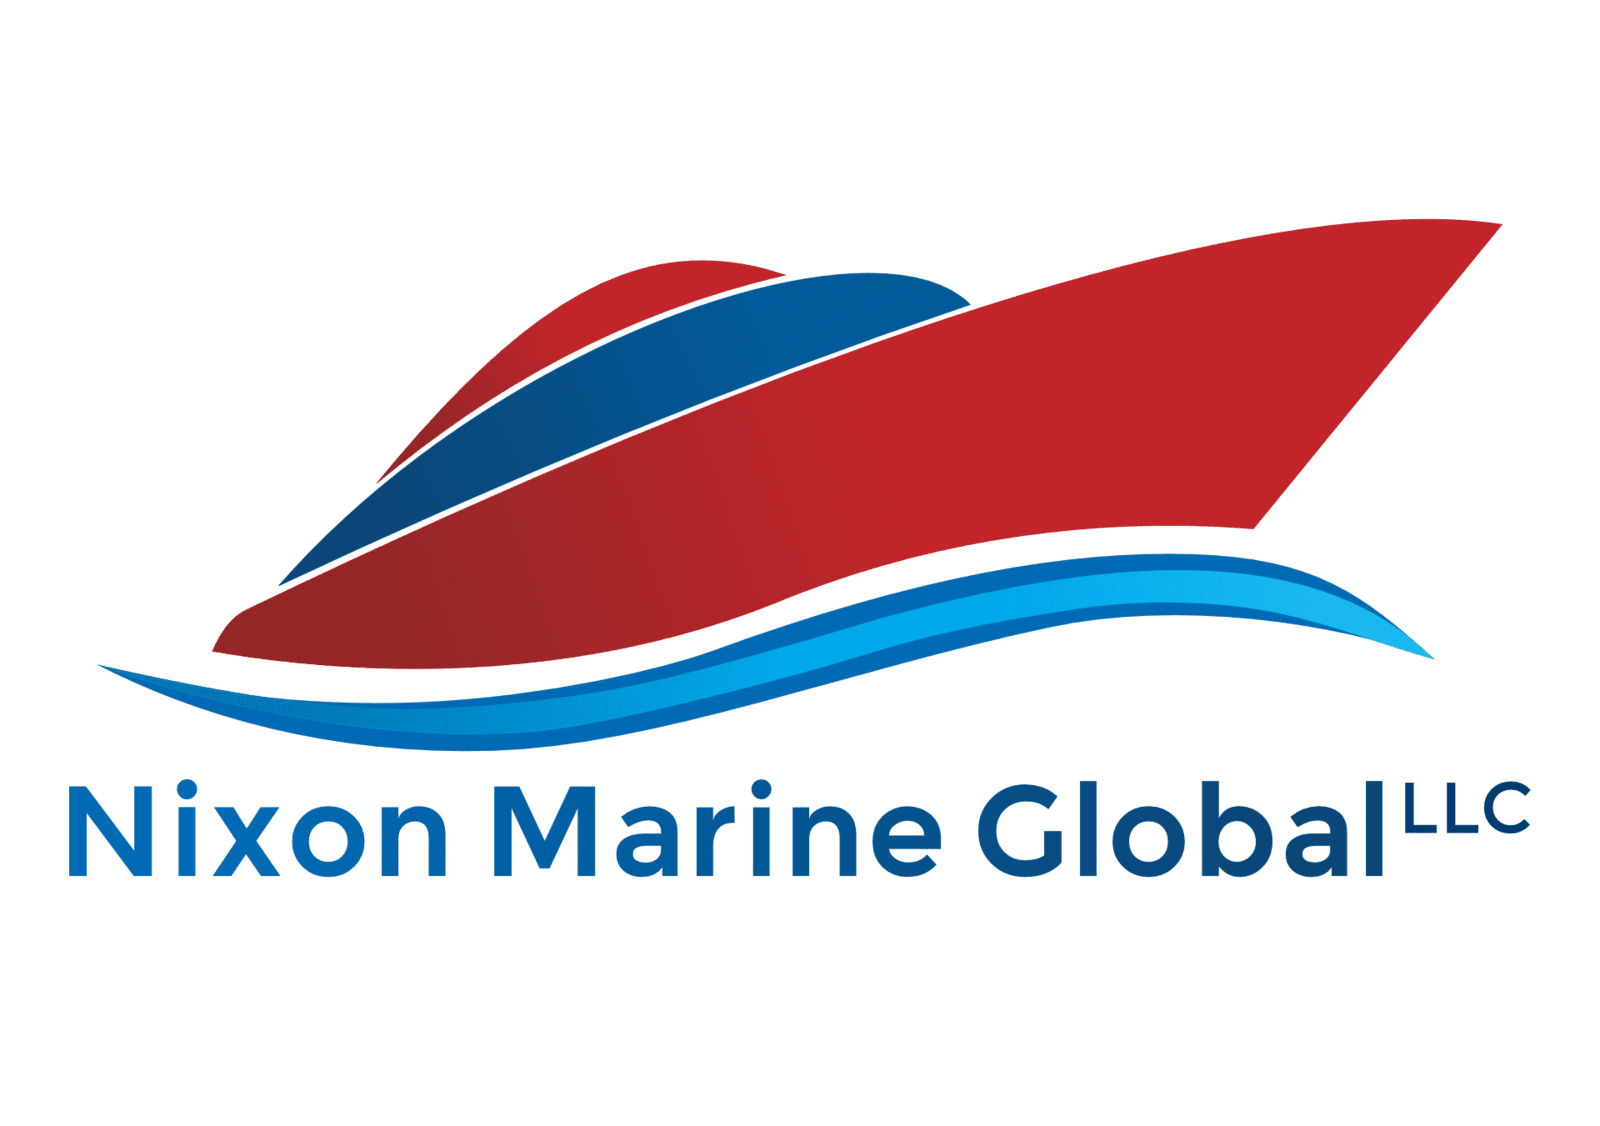 Wholesale Boat Equipment for Marine Professionals